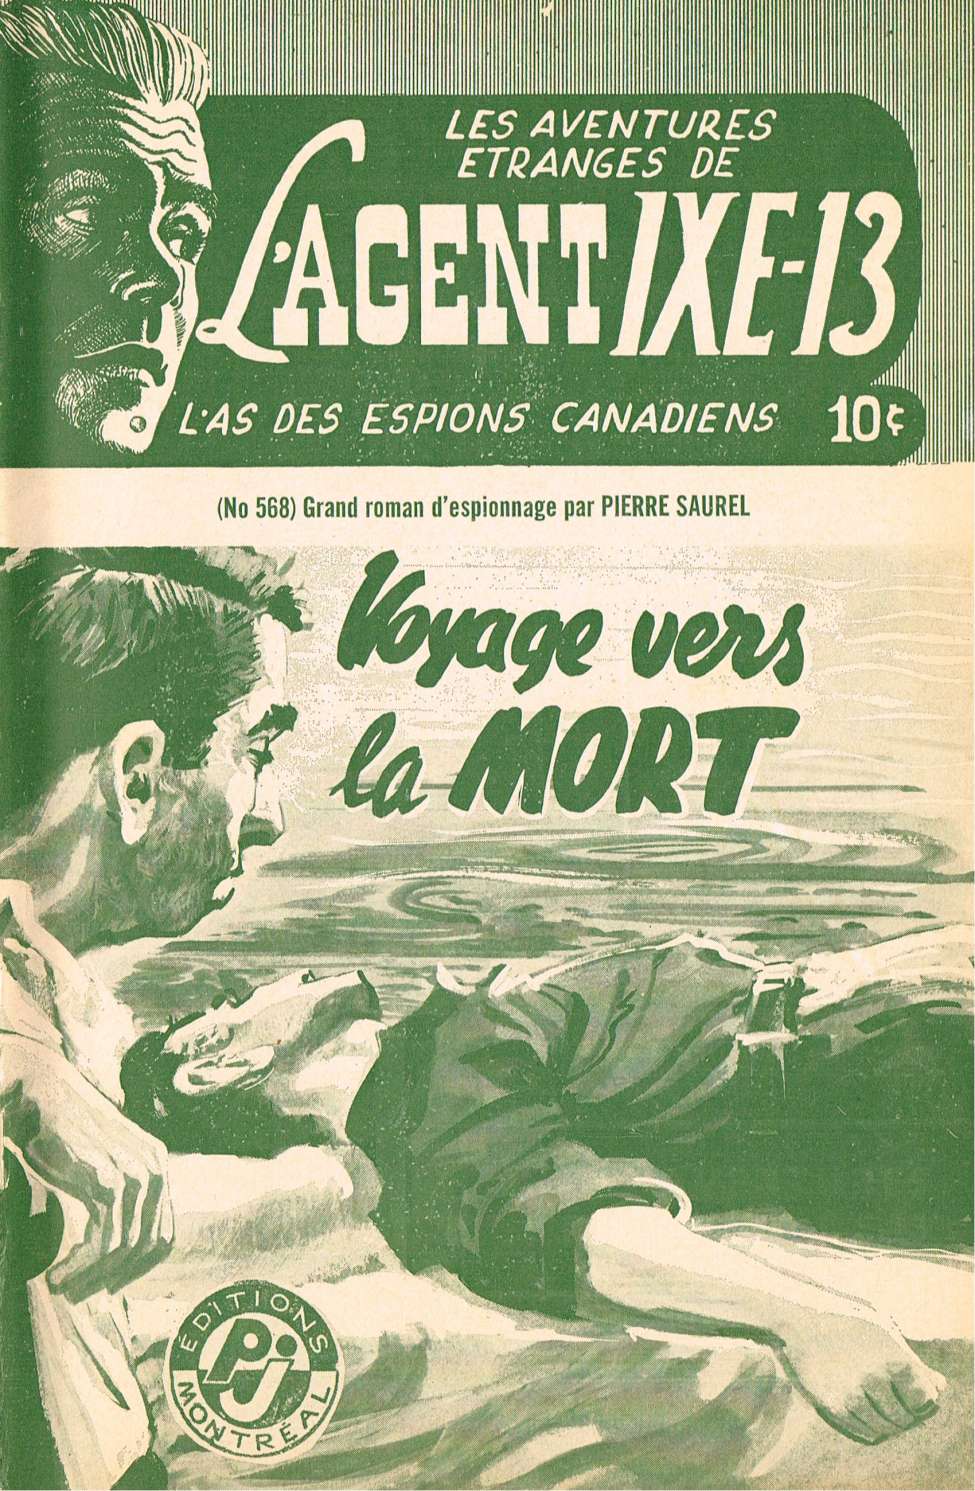 Book Cover For L'Agent IXE-13 v2 568 - Voyage vers la mort